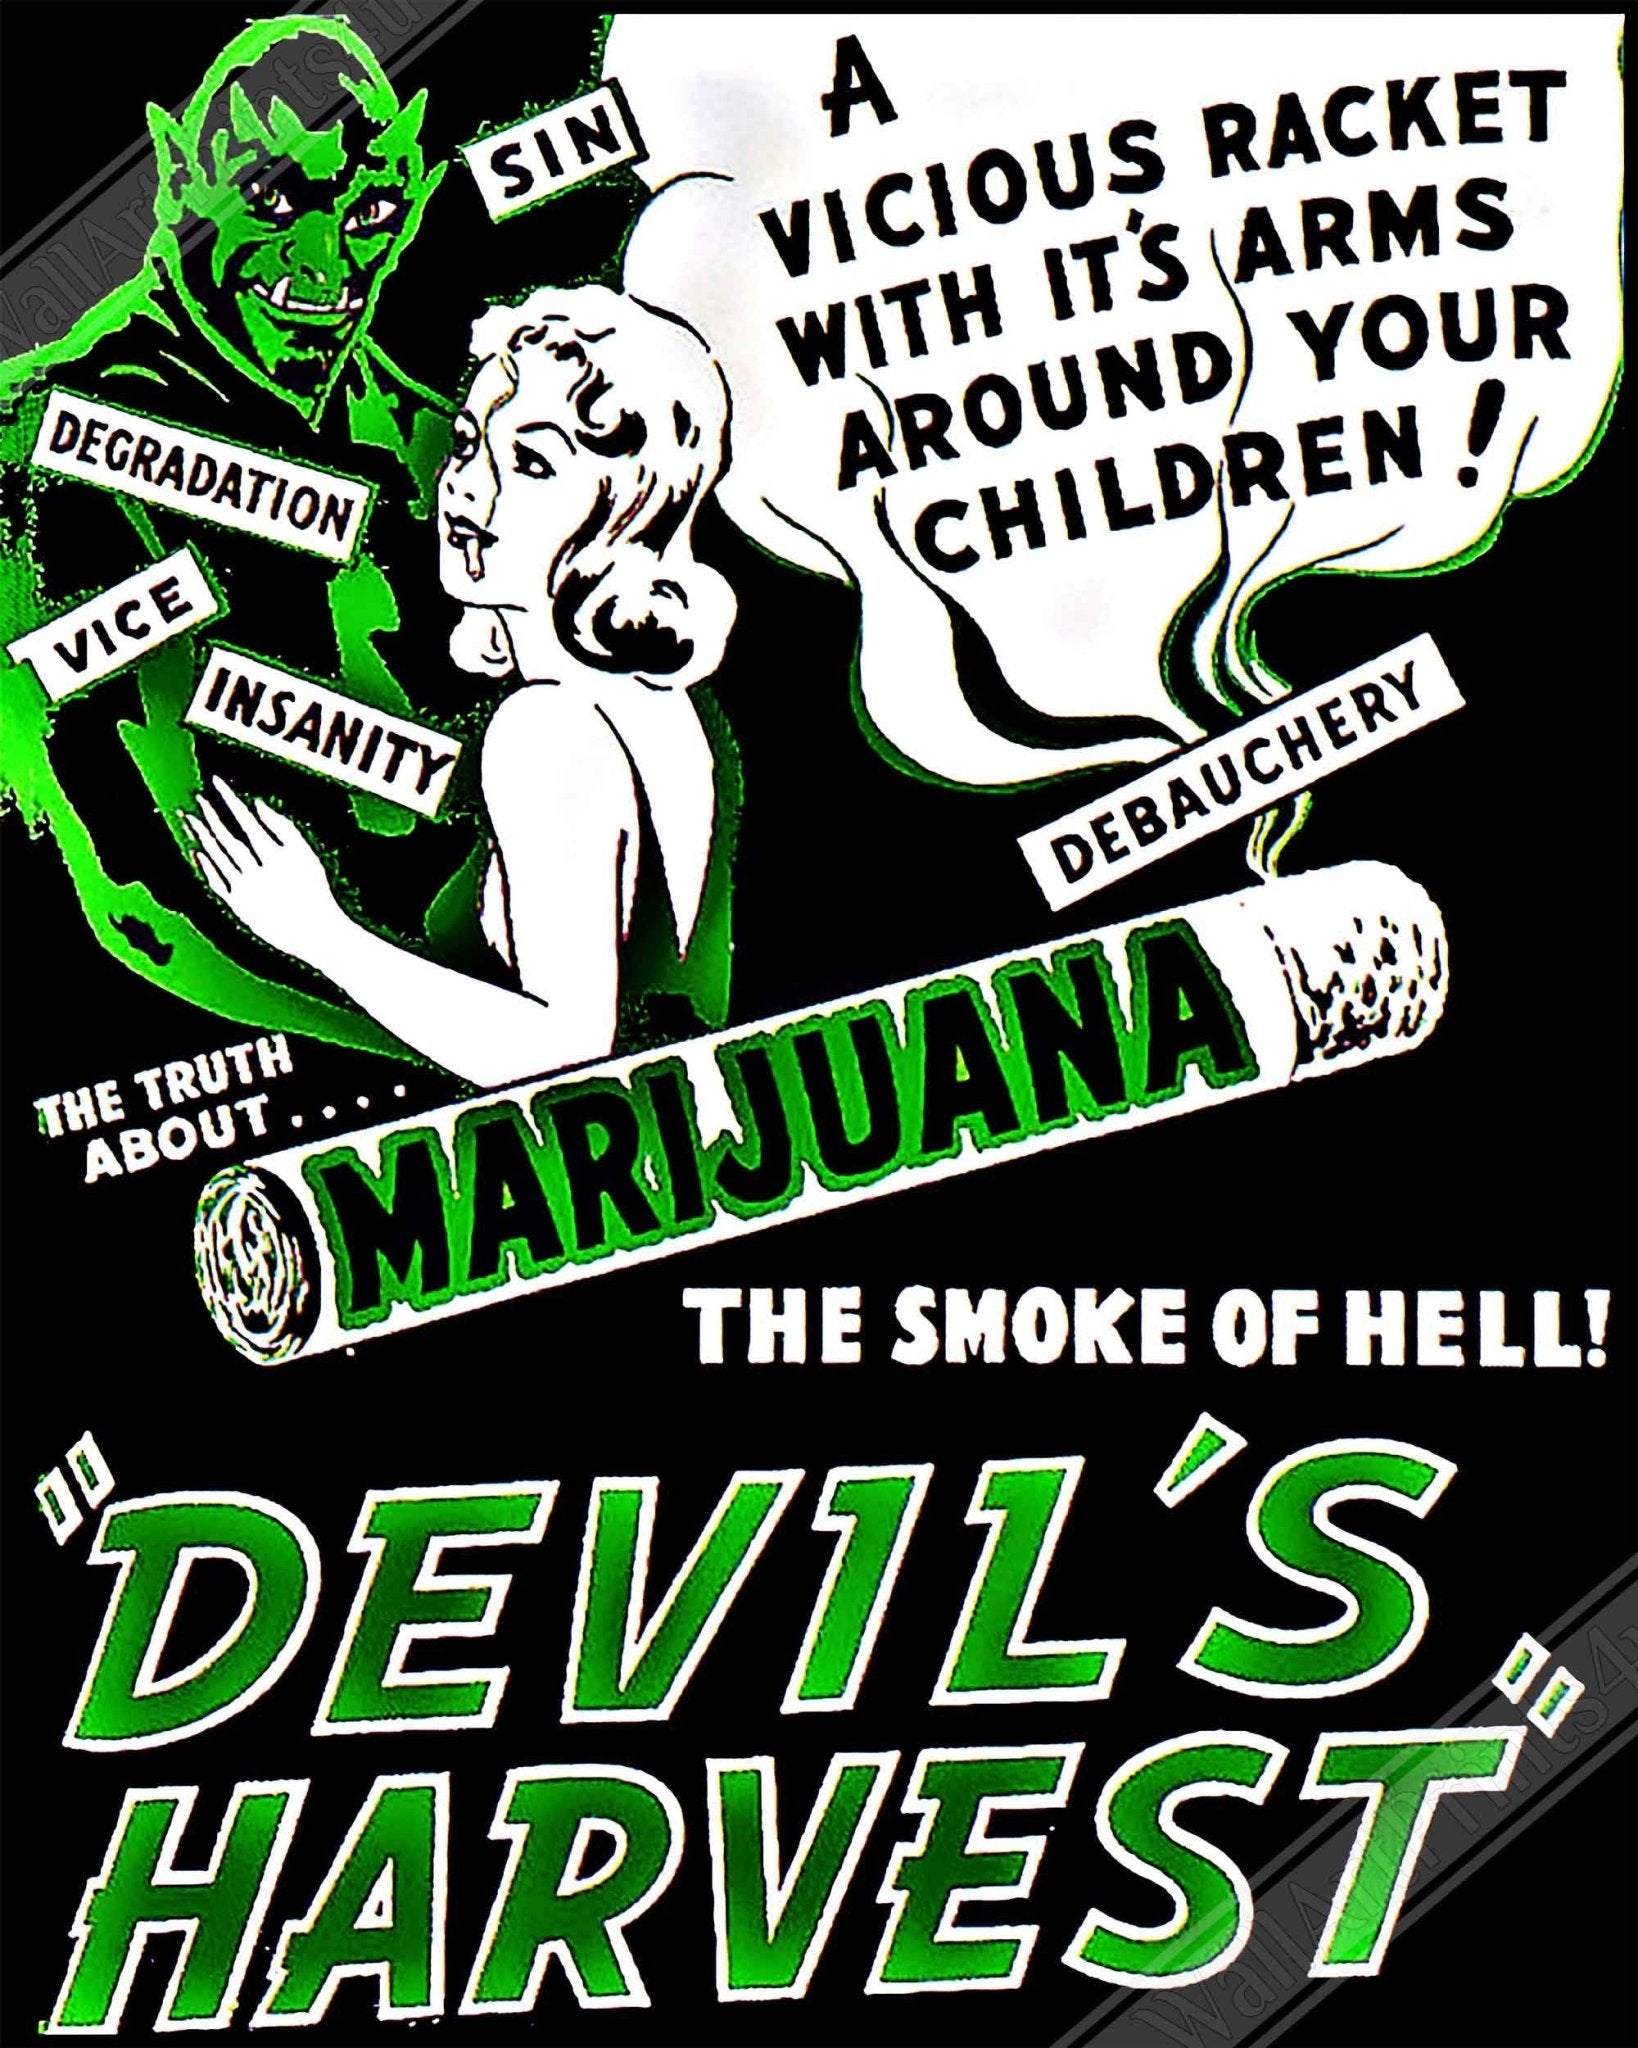 Devils Harvest Marijuana Propaganda Poster, "Scary" Cannabis Propaganda - Marijuana Propaganda Print - WallArtPrints4U